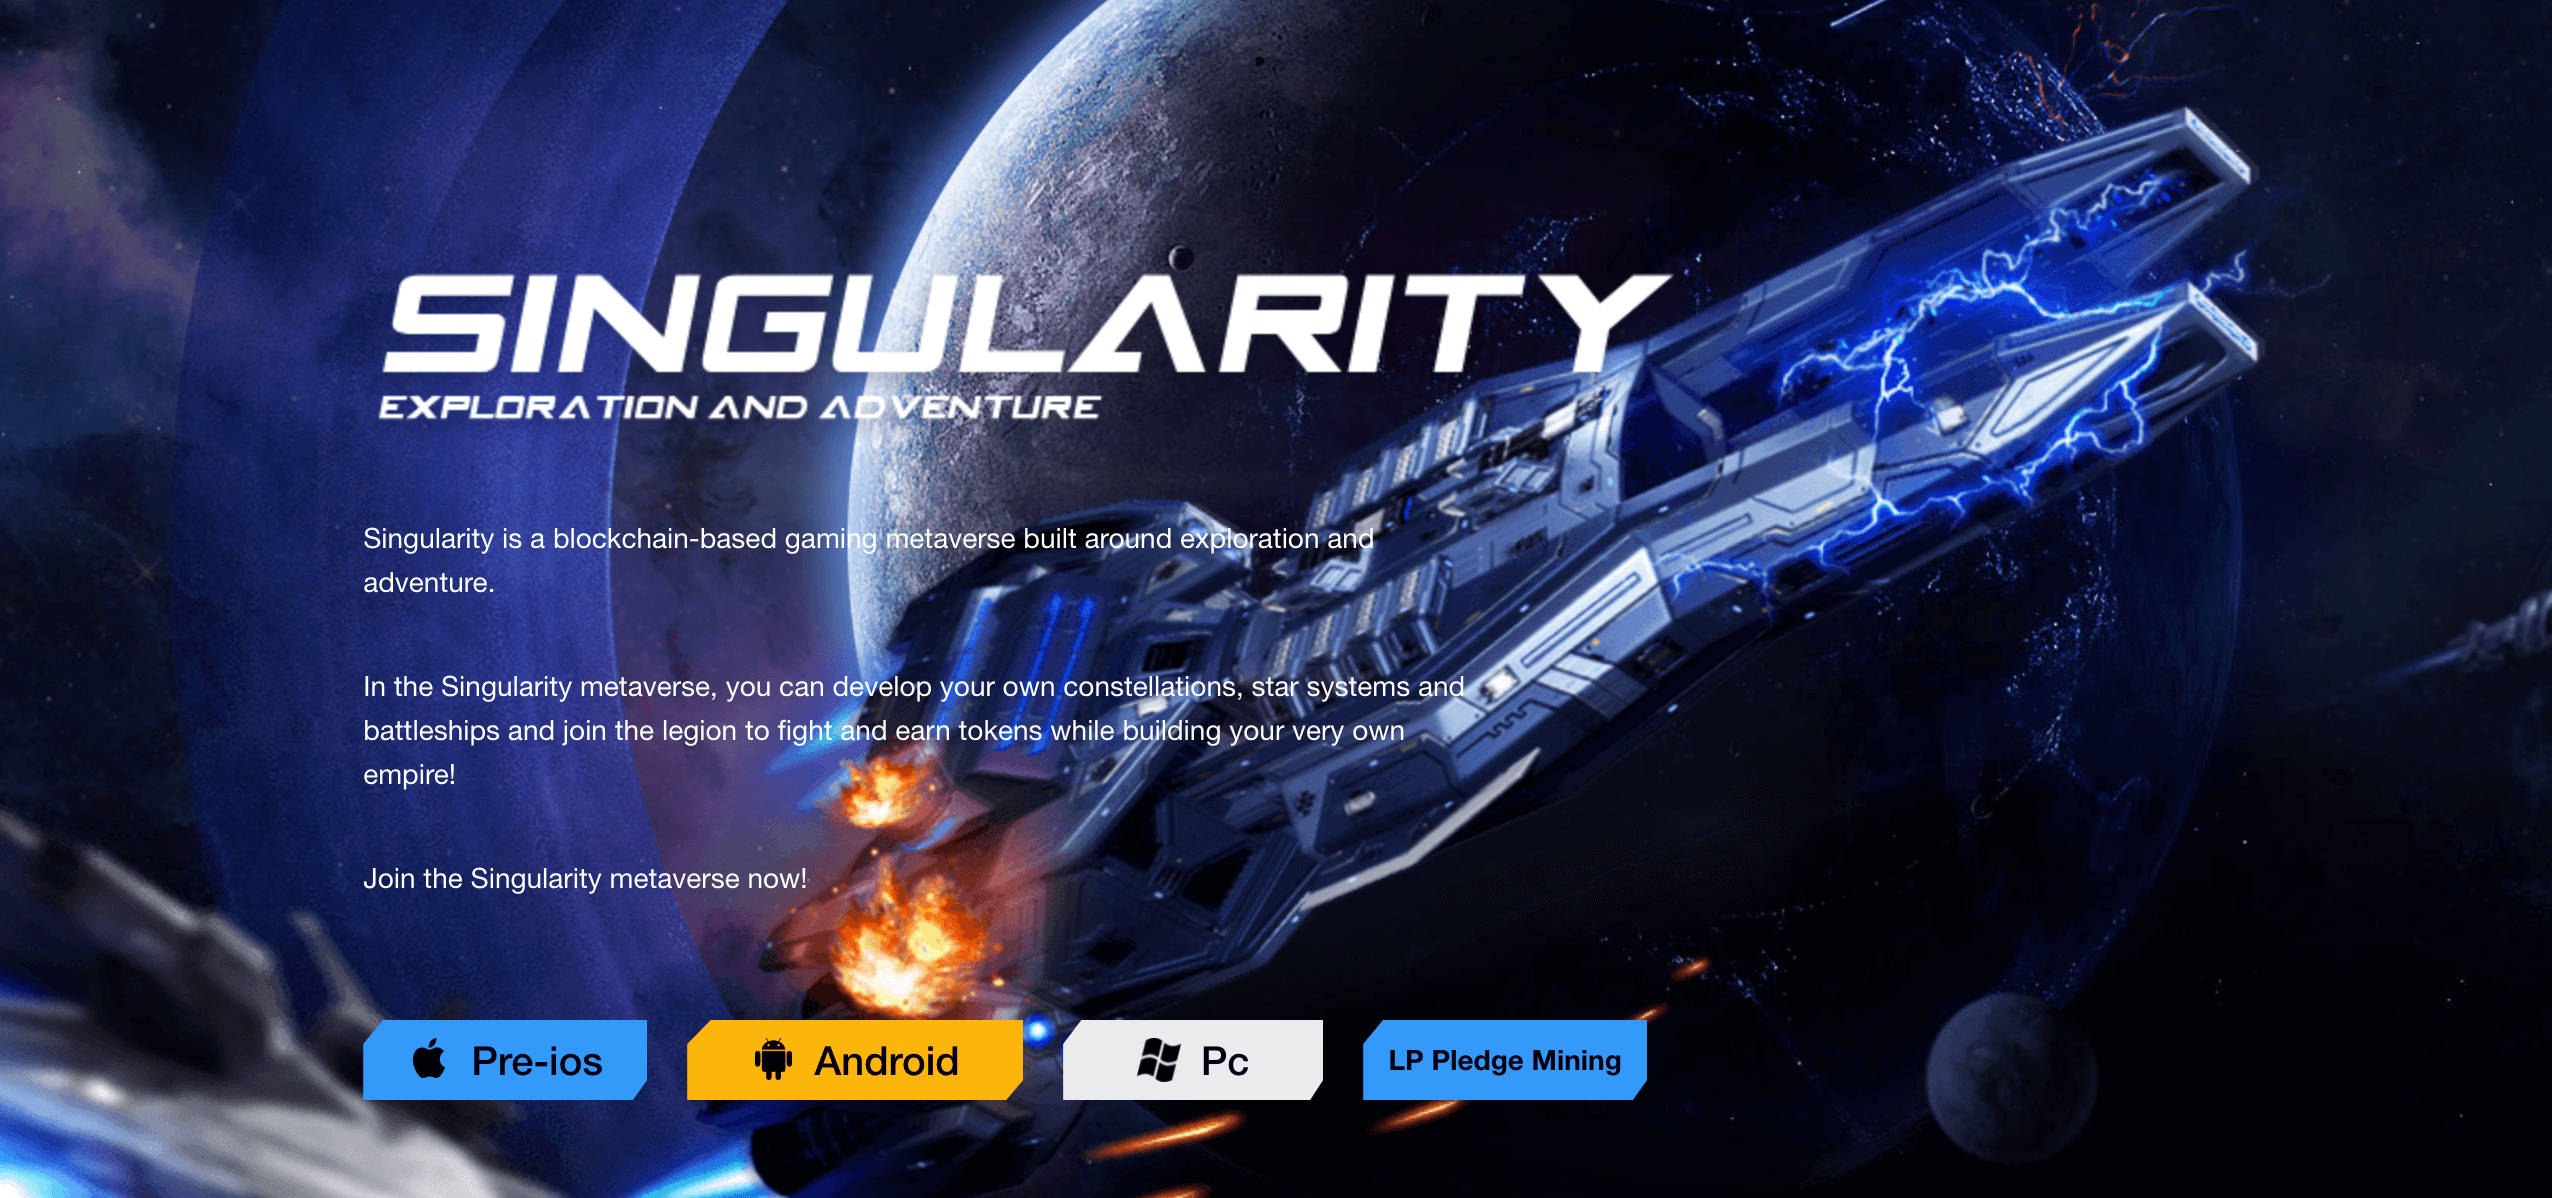 Singularity cover